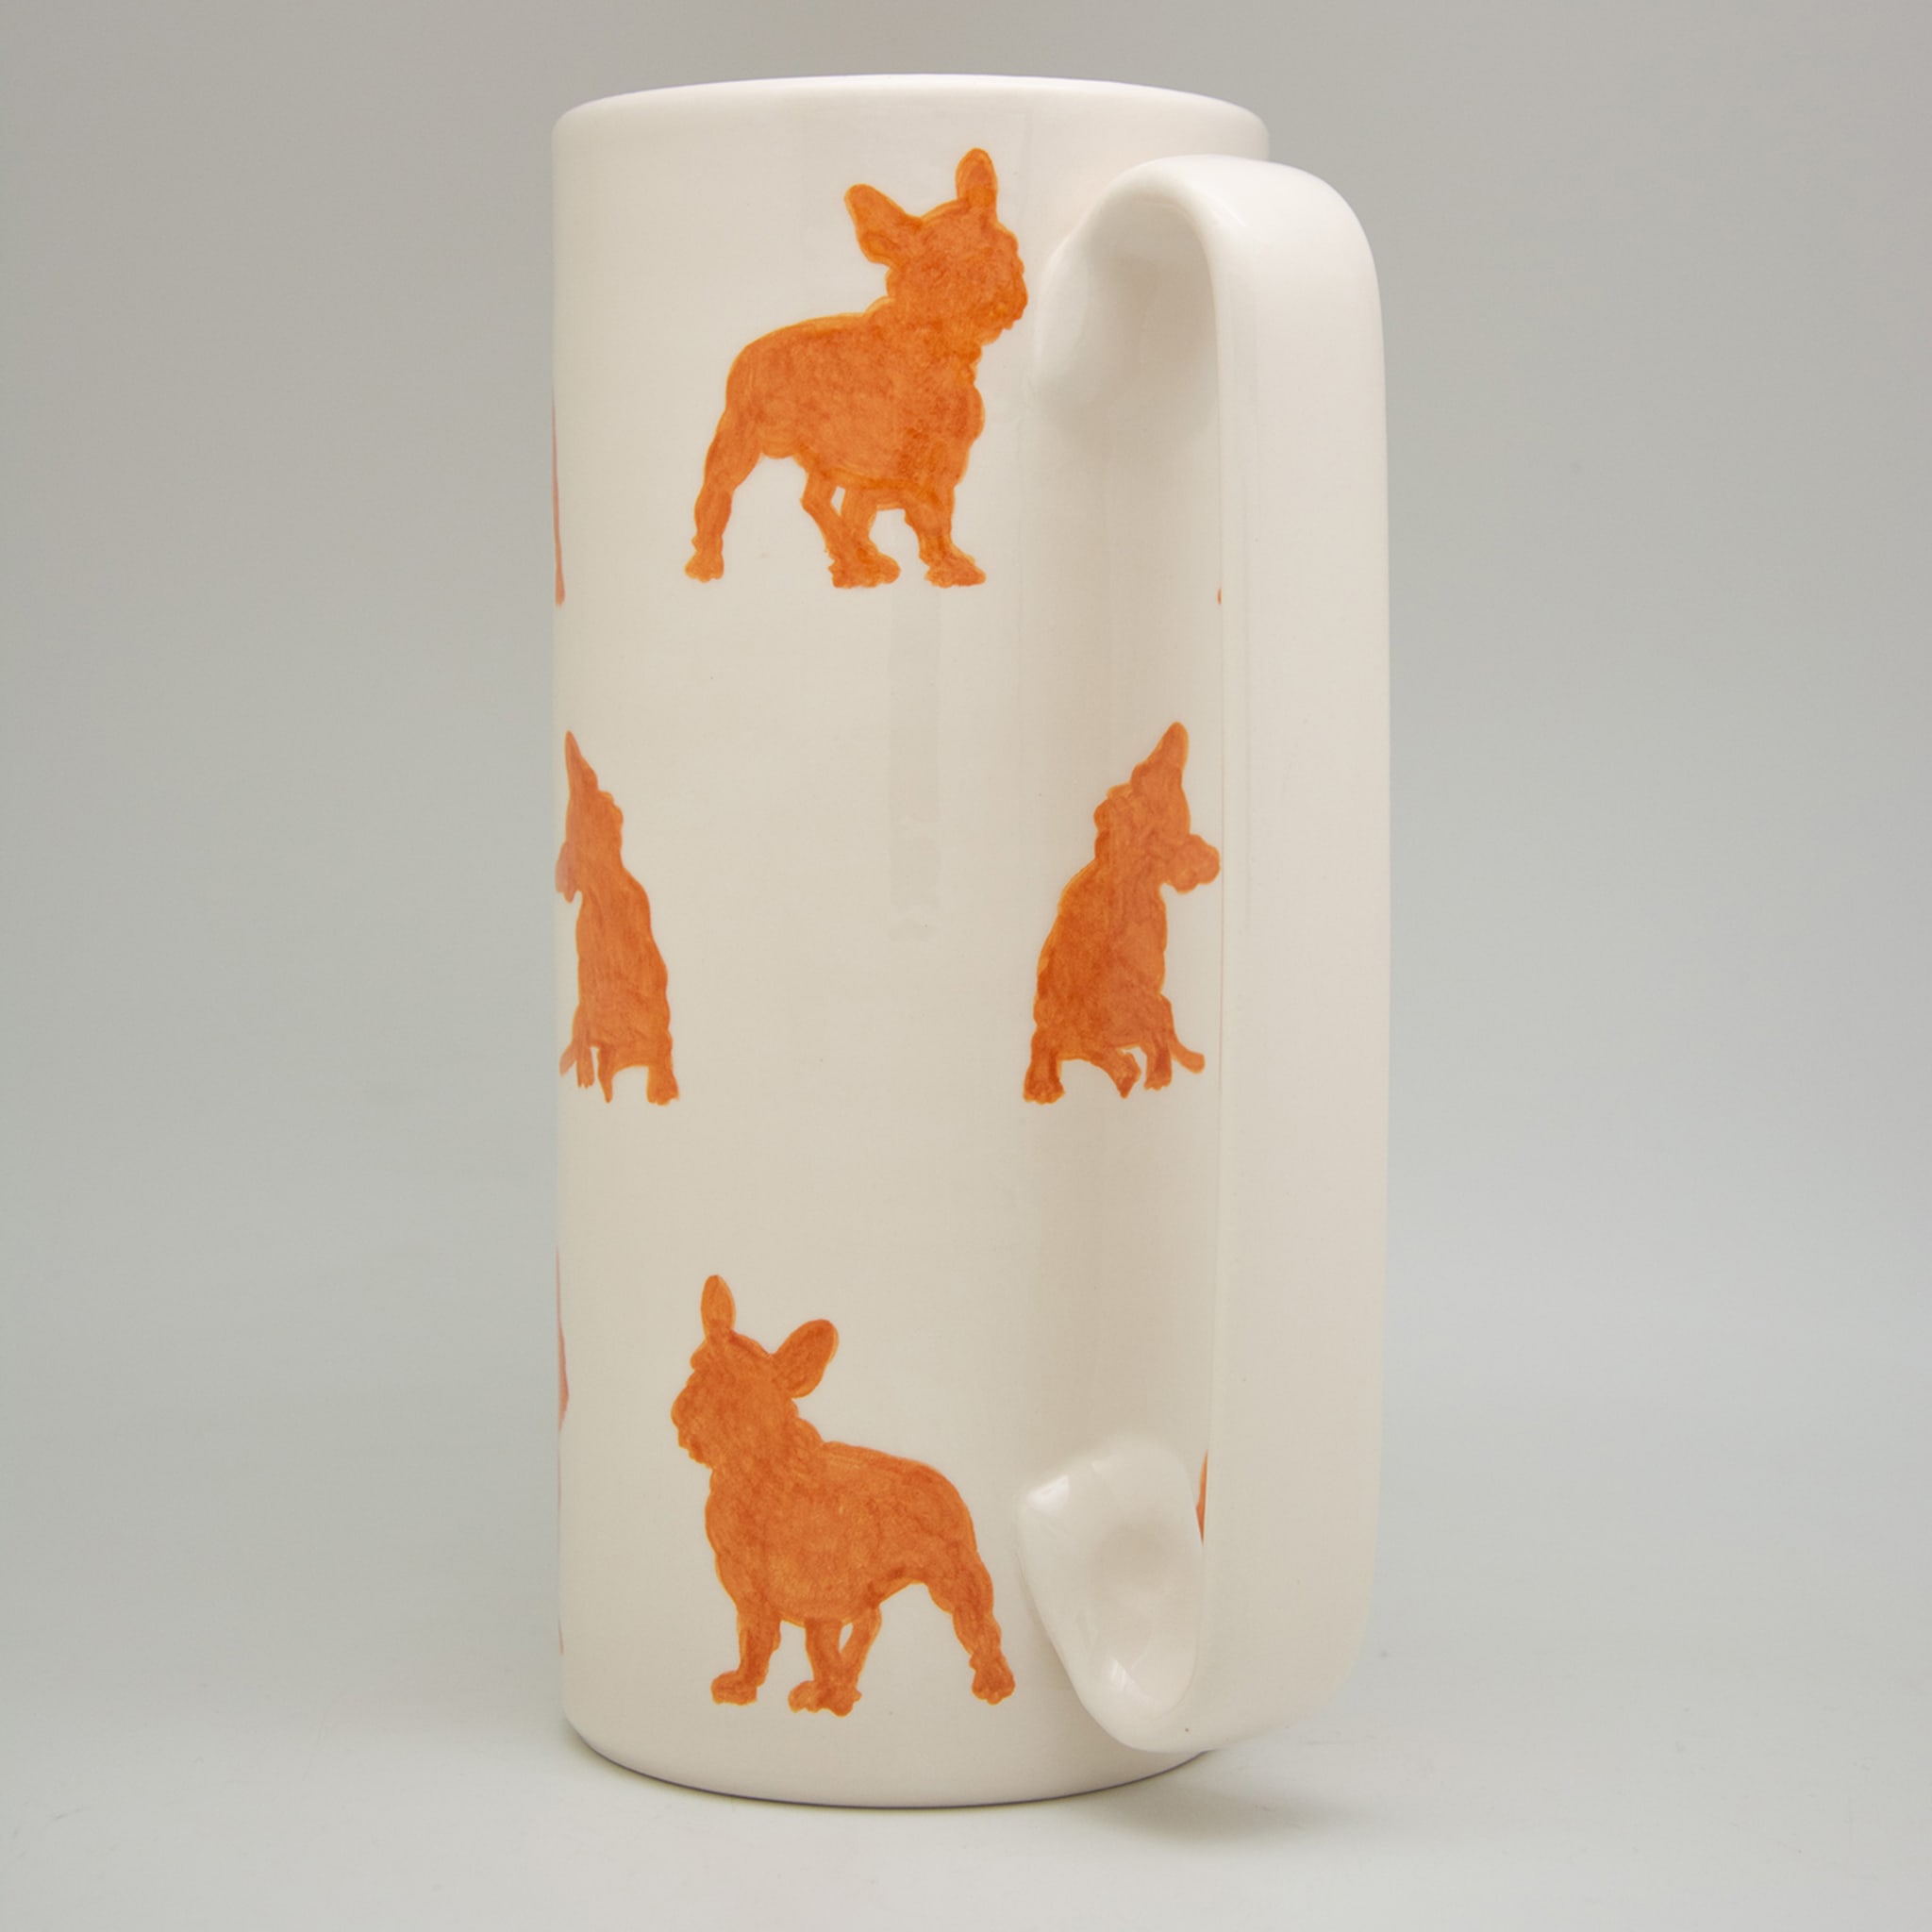 Serlio French Bulldog Orange Ceramic Carafe - Alternative view 1